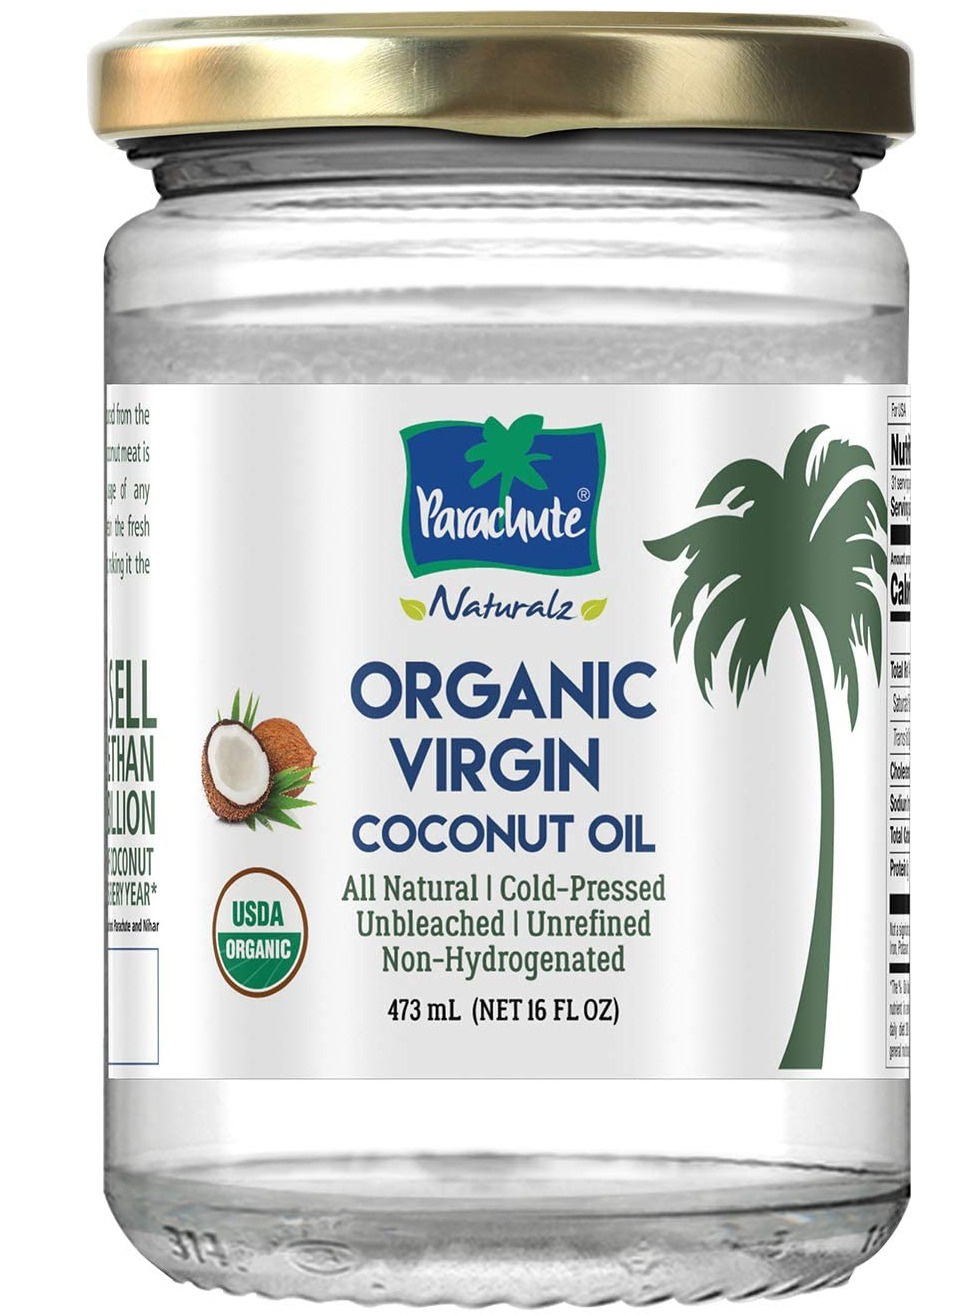 Parachute Naturalz 100% Unrefined Organic Virgin Coconut Oil